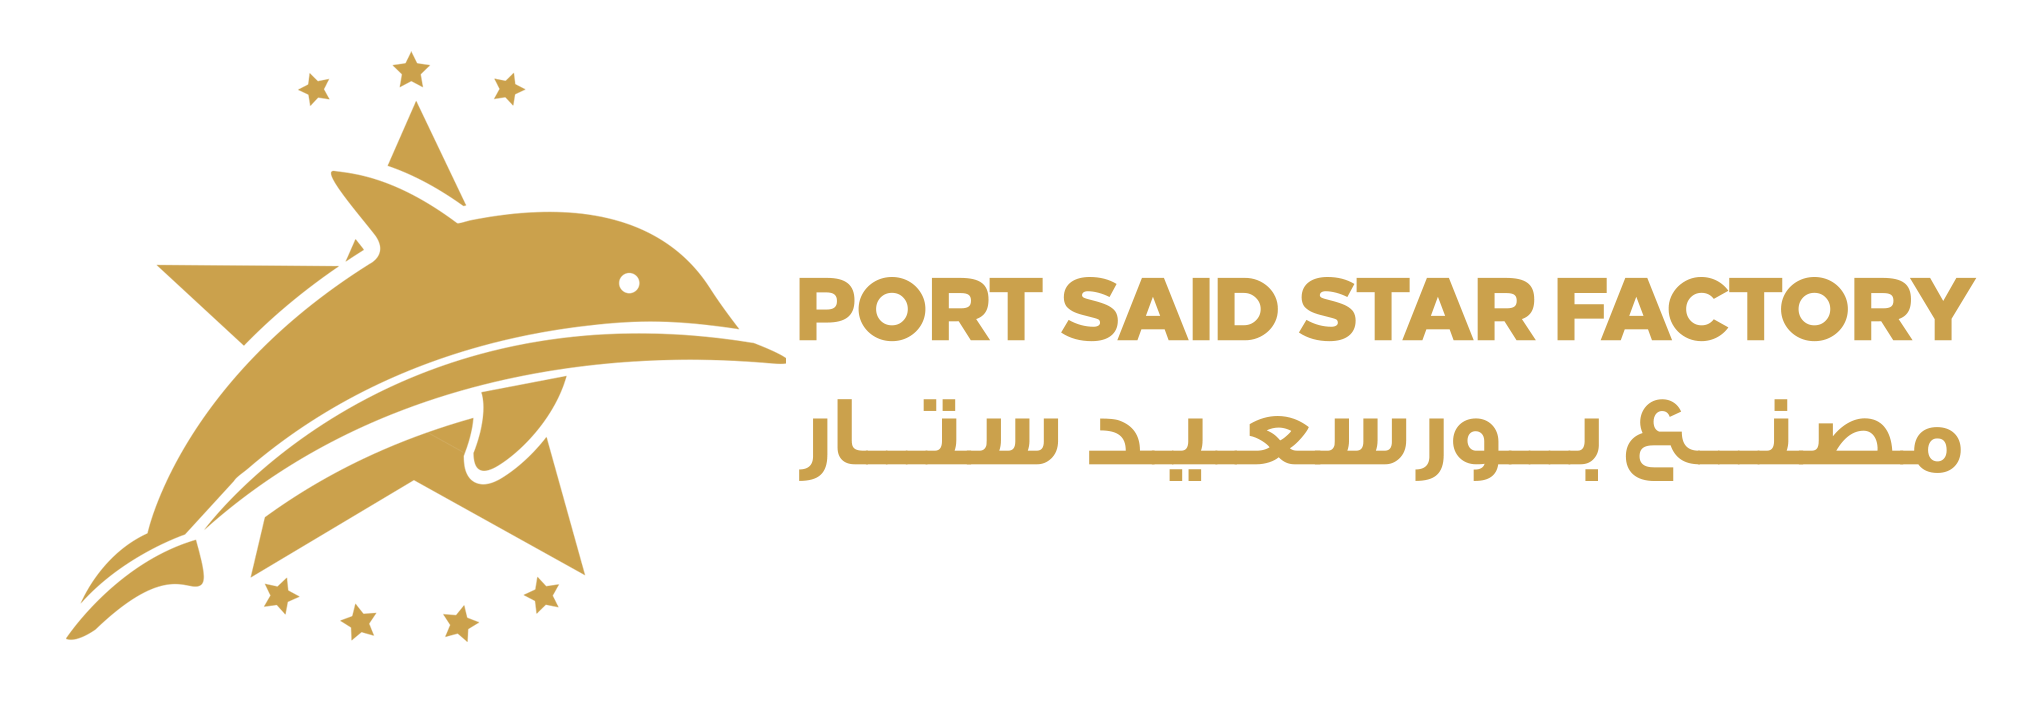 Port Said Star Factory